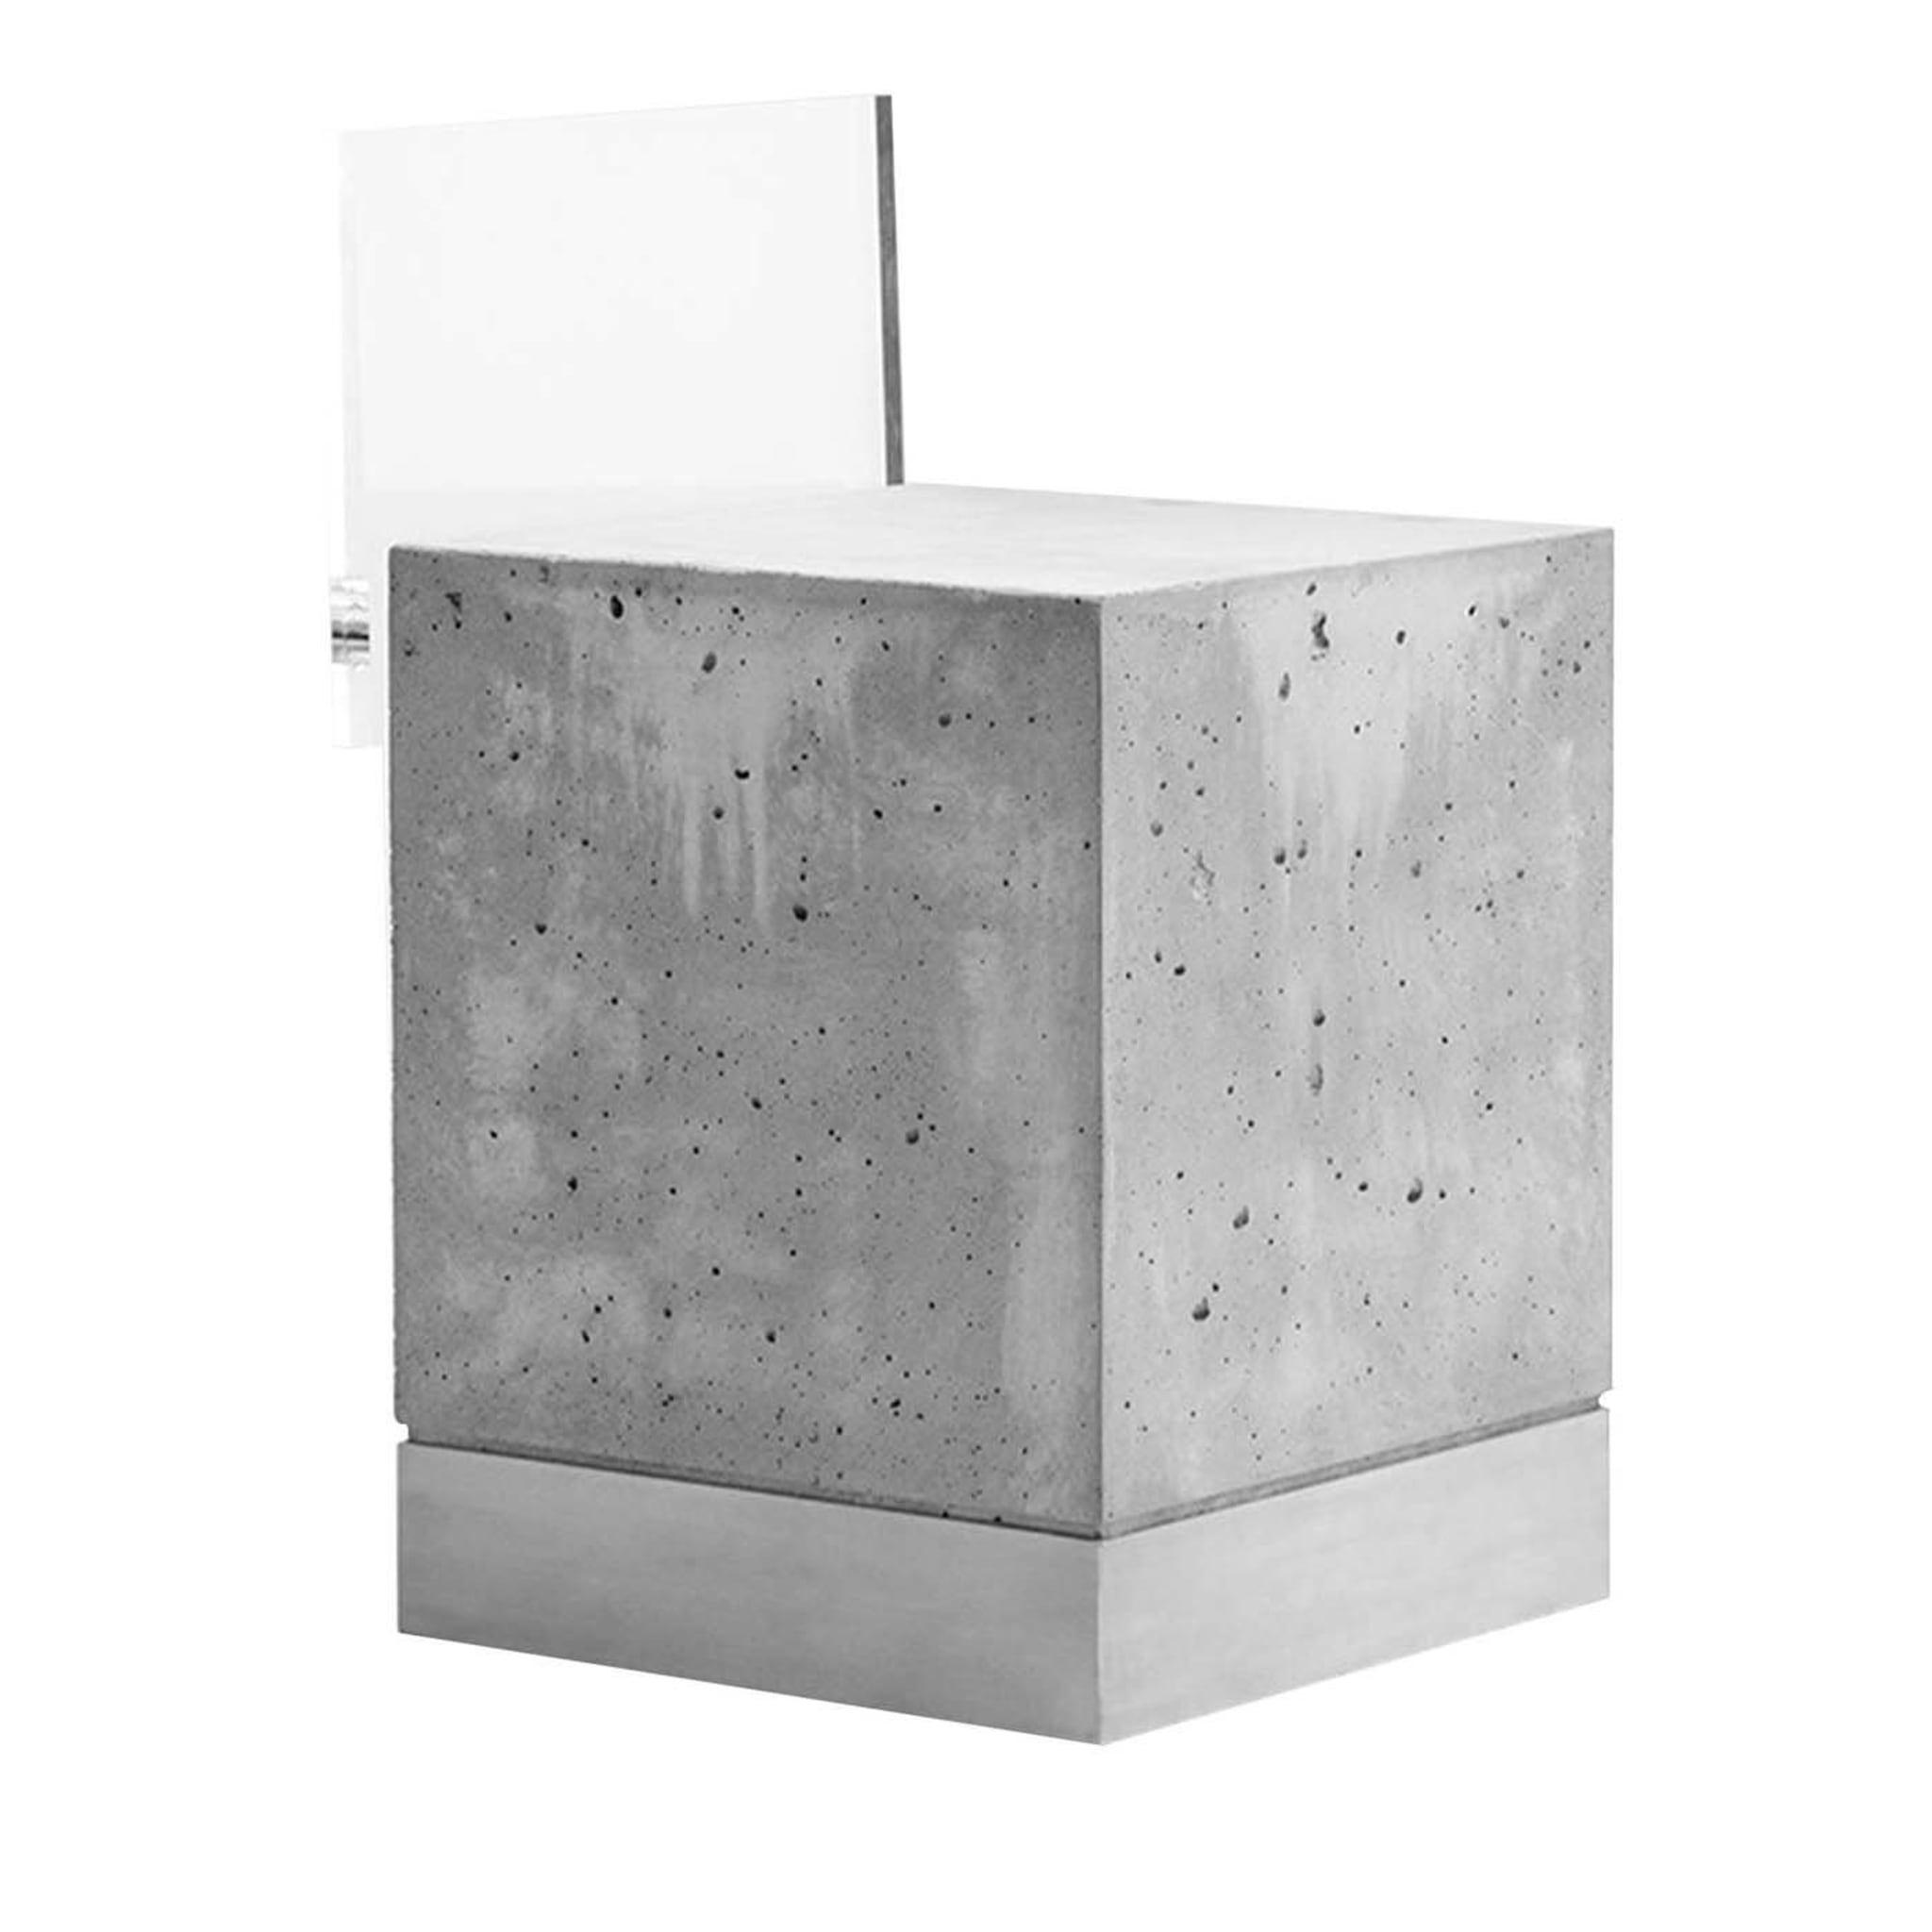 Techno Concrete Chair by Dimoremilano - Main view